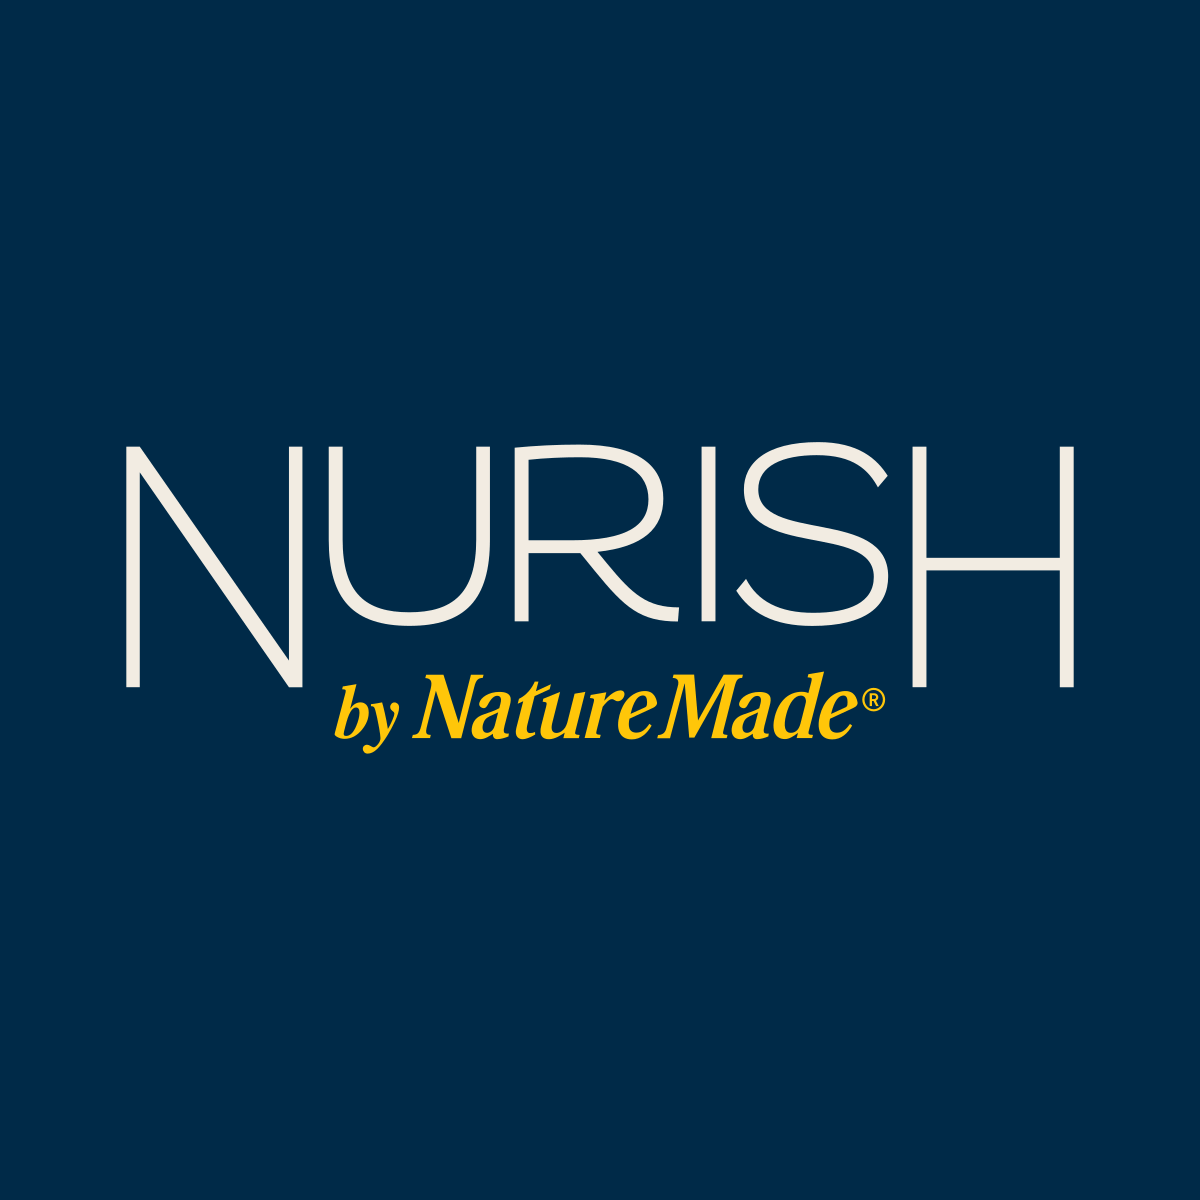 nurish by nature made logo